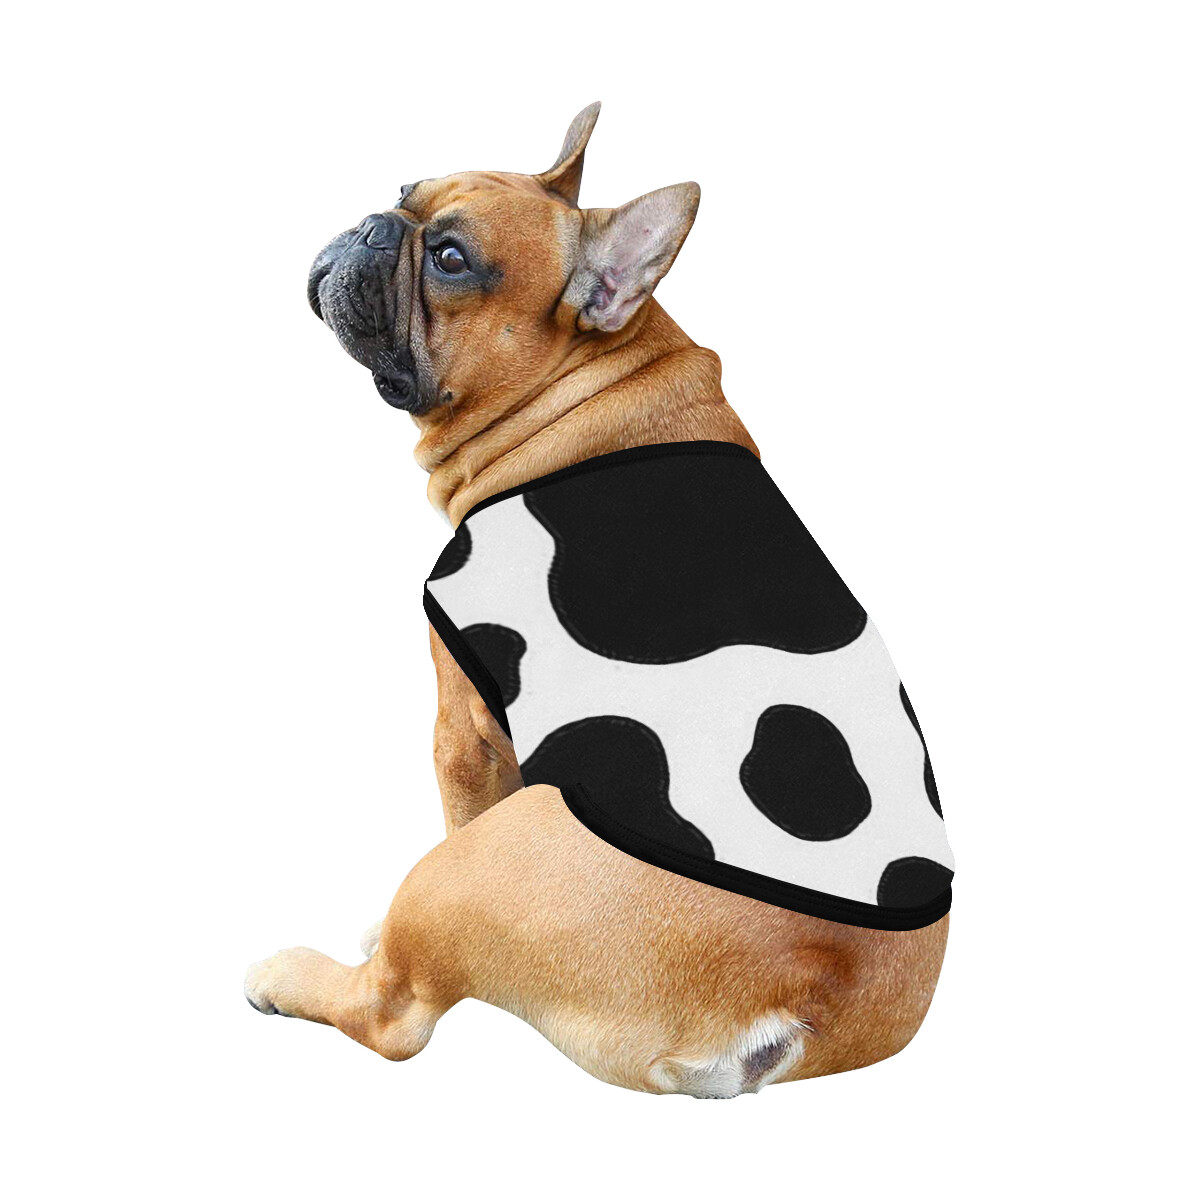 🐕 Animal print Cow Dog Tank Top, Dog shirt, Dog clothes, Gifts, front back print, 7 sizes XS to 3XL, dog t-shirt, dog gift